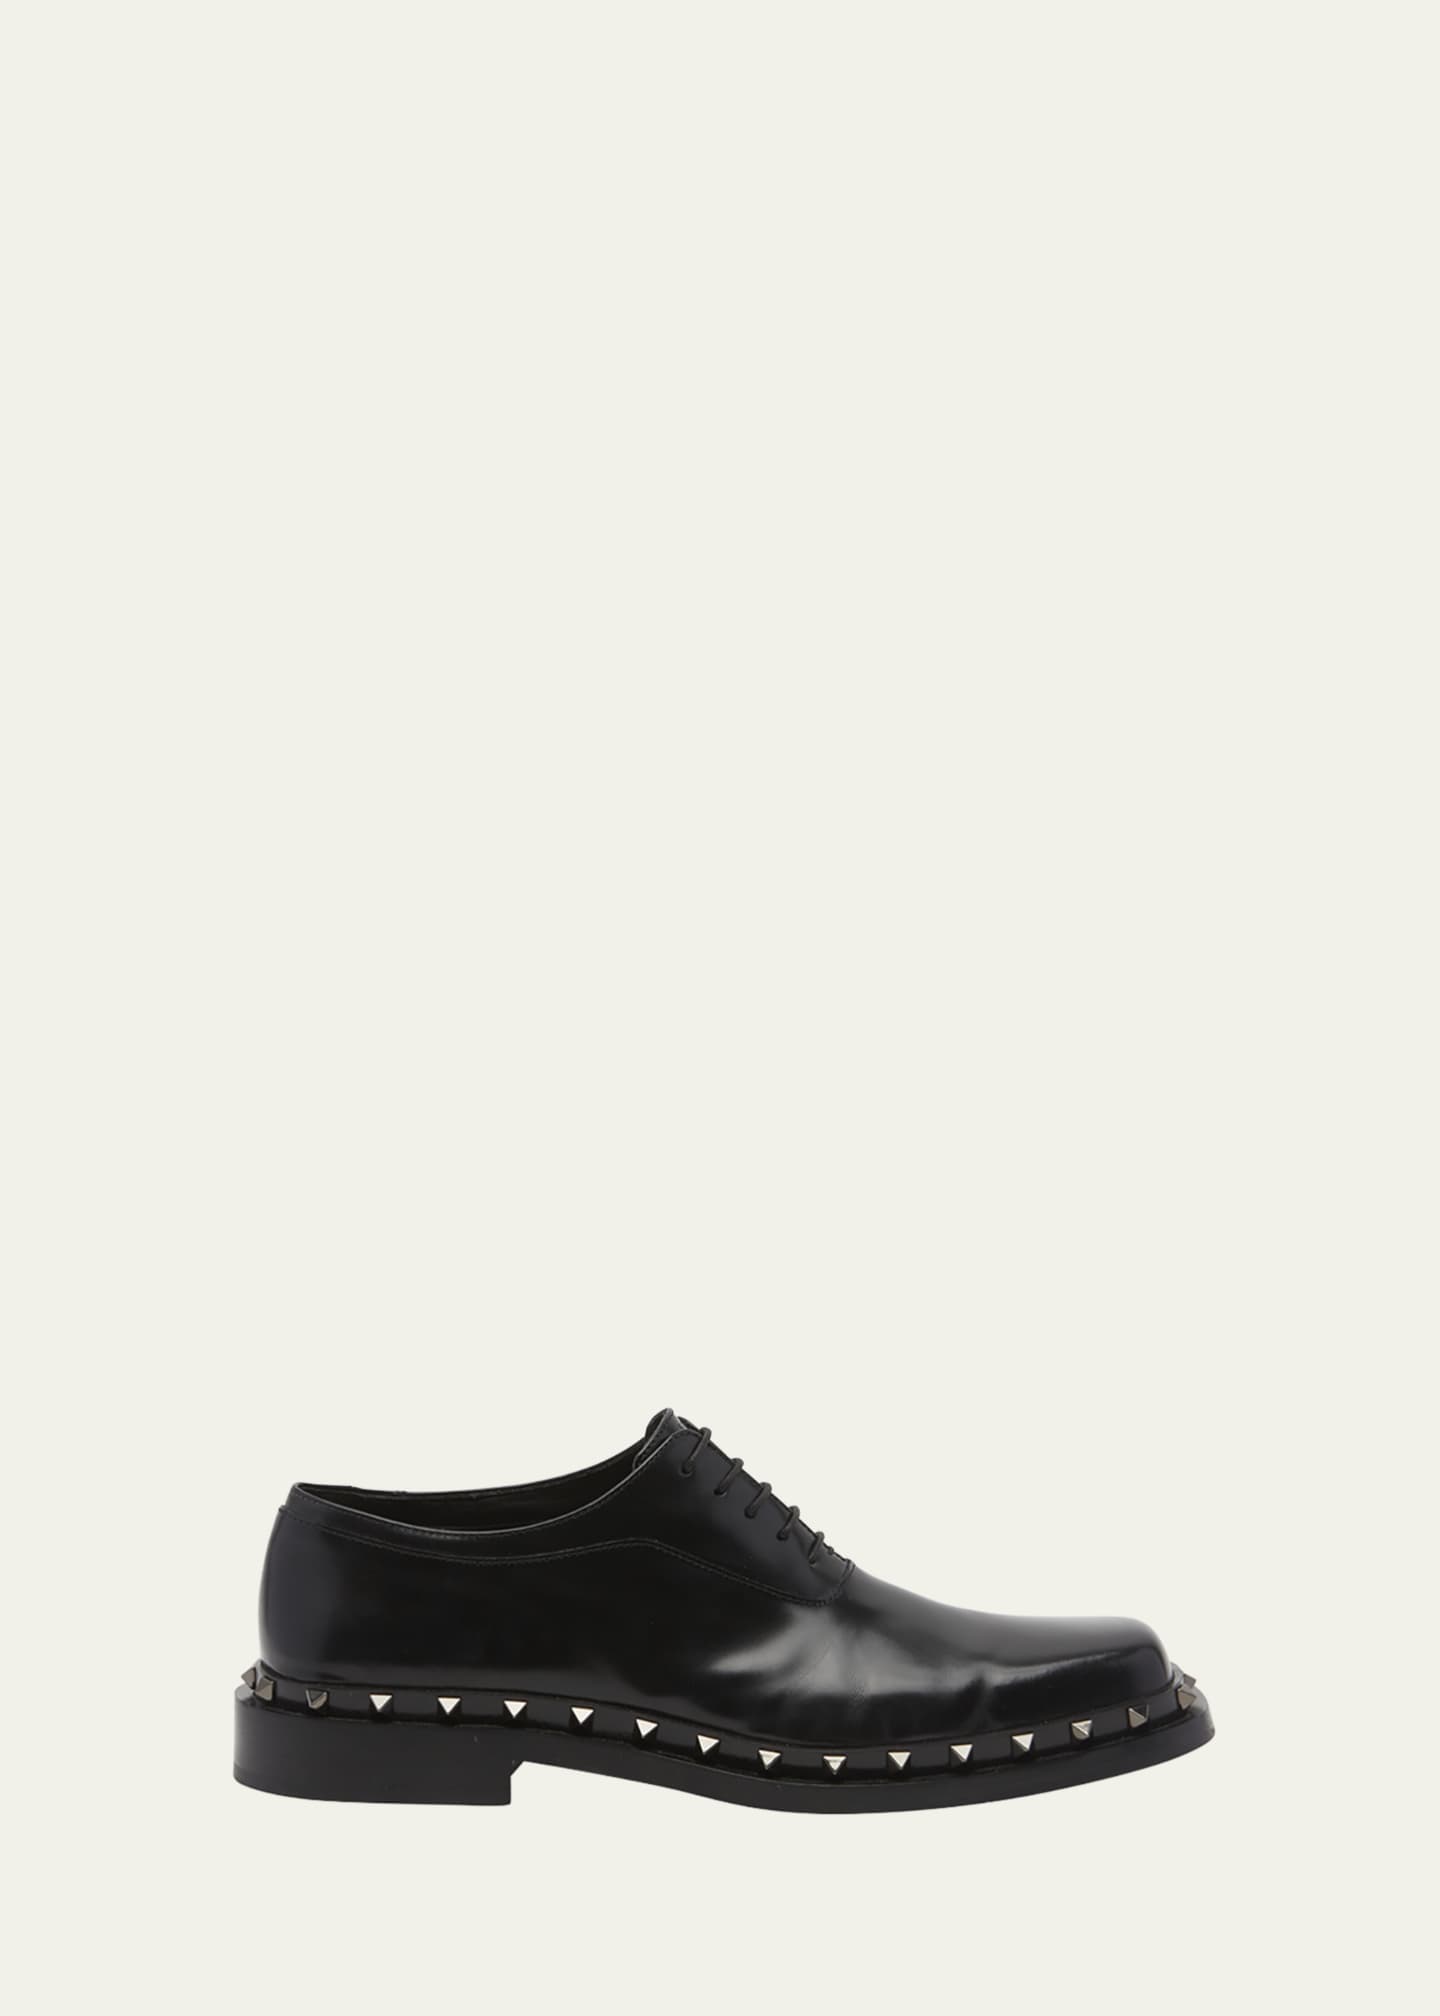 Valentino Garavani Rockstud Leather Ankle-Strap Pumps - Bergdorf